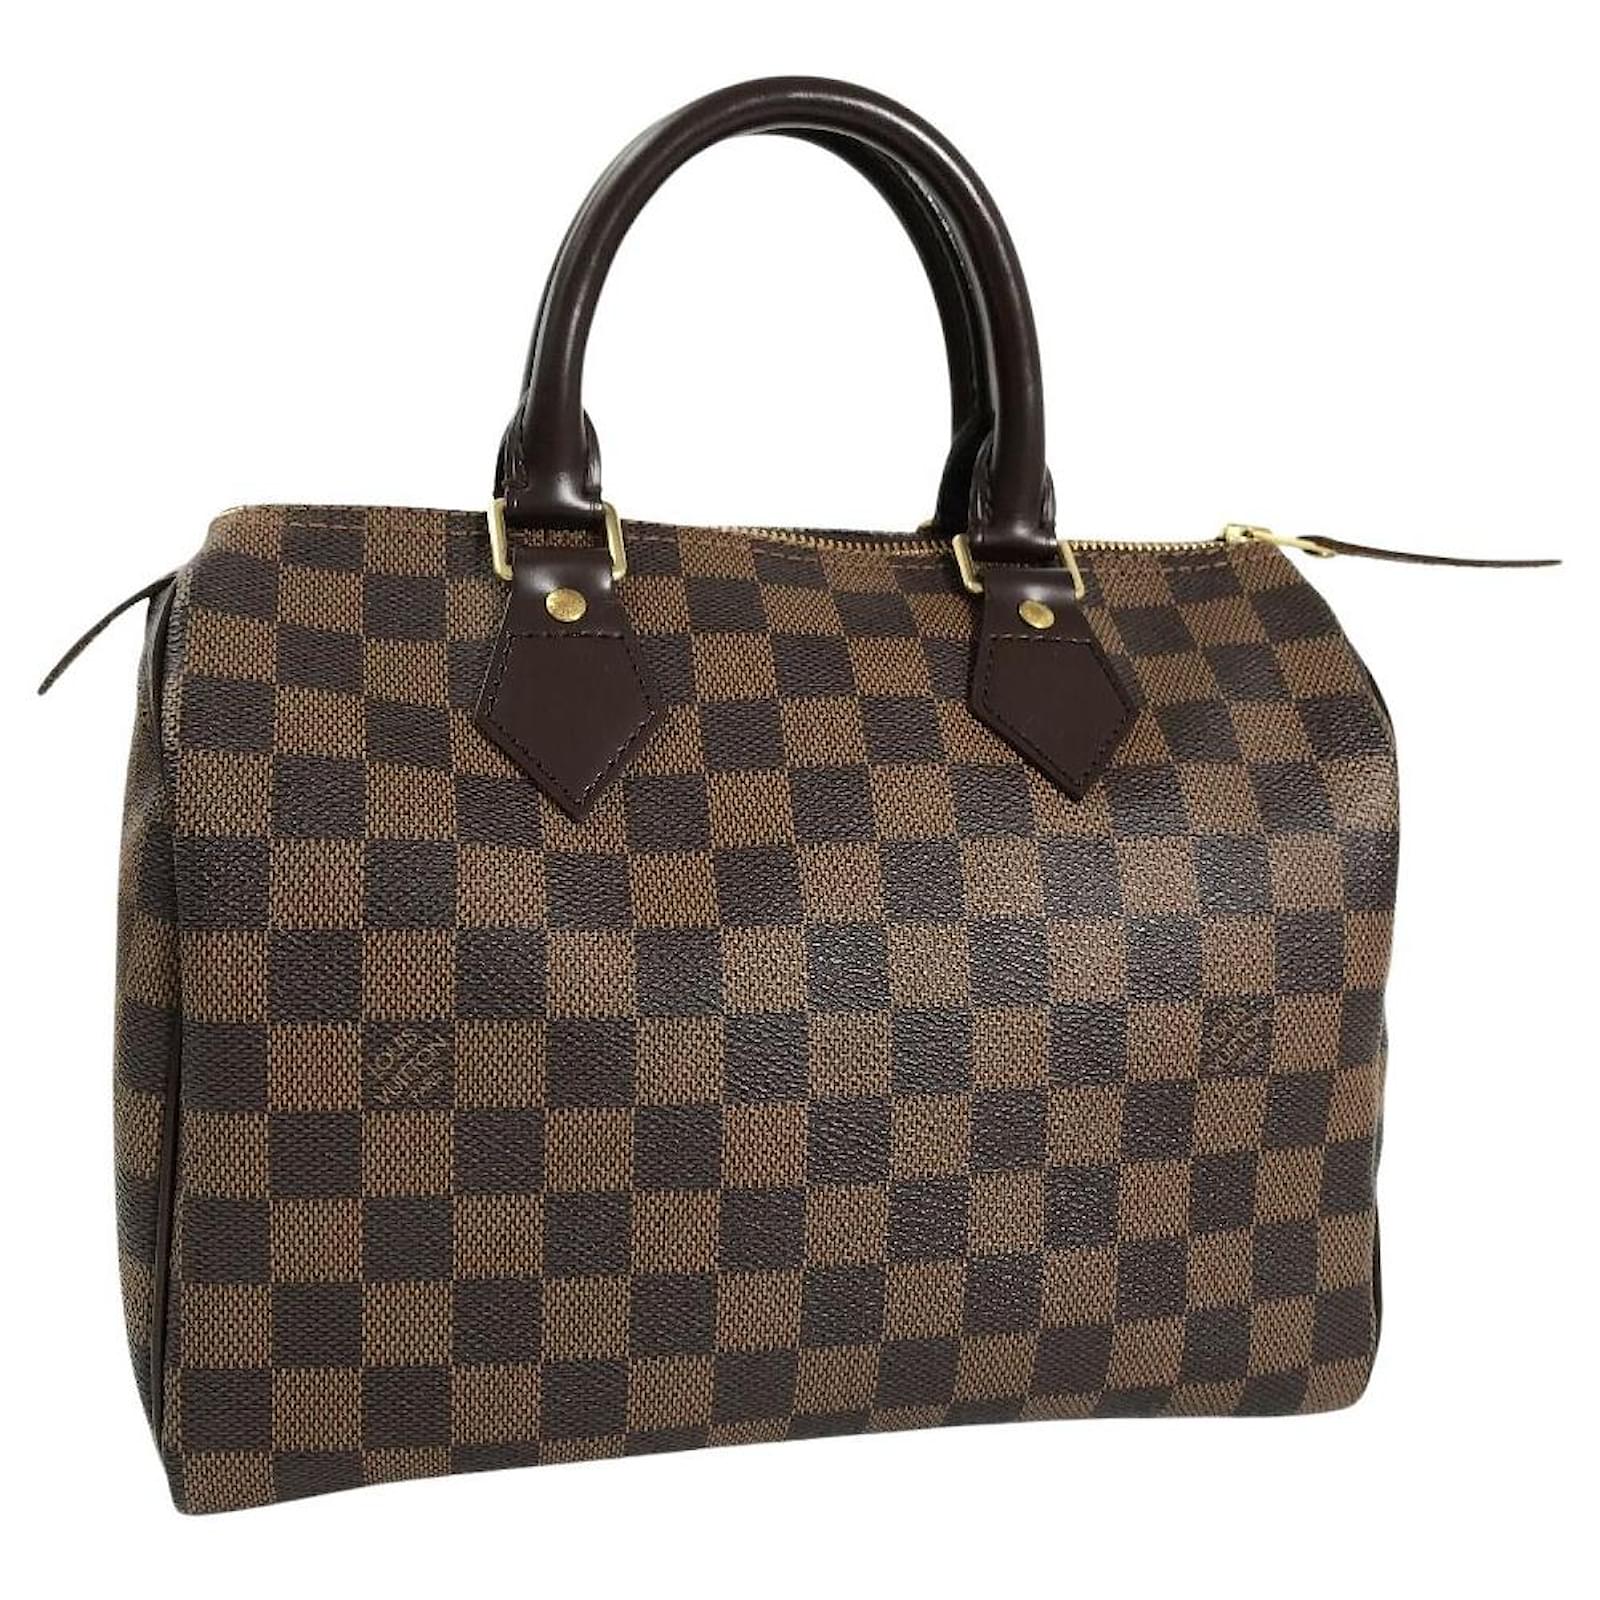 Louis Vuitton Damier Ebene Canvas Speedy 25 Bag